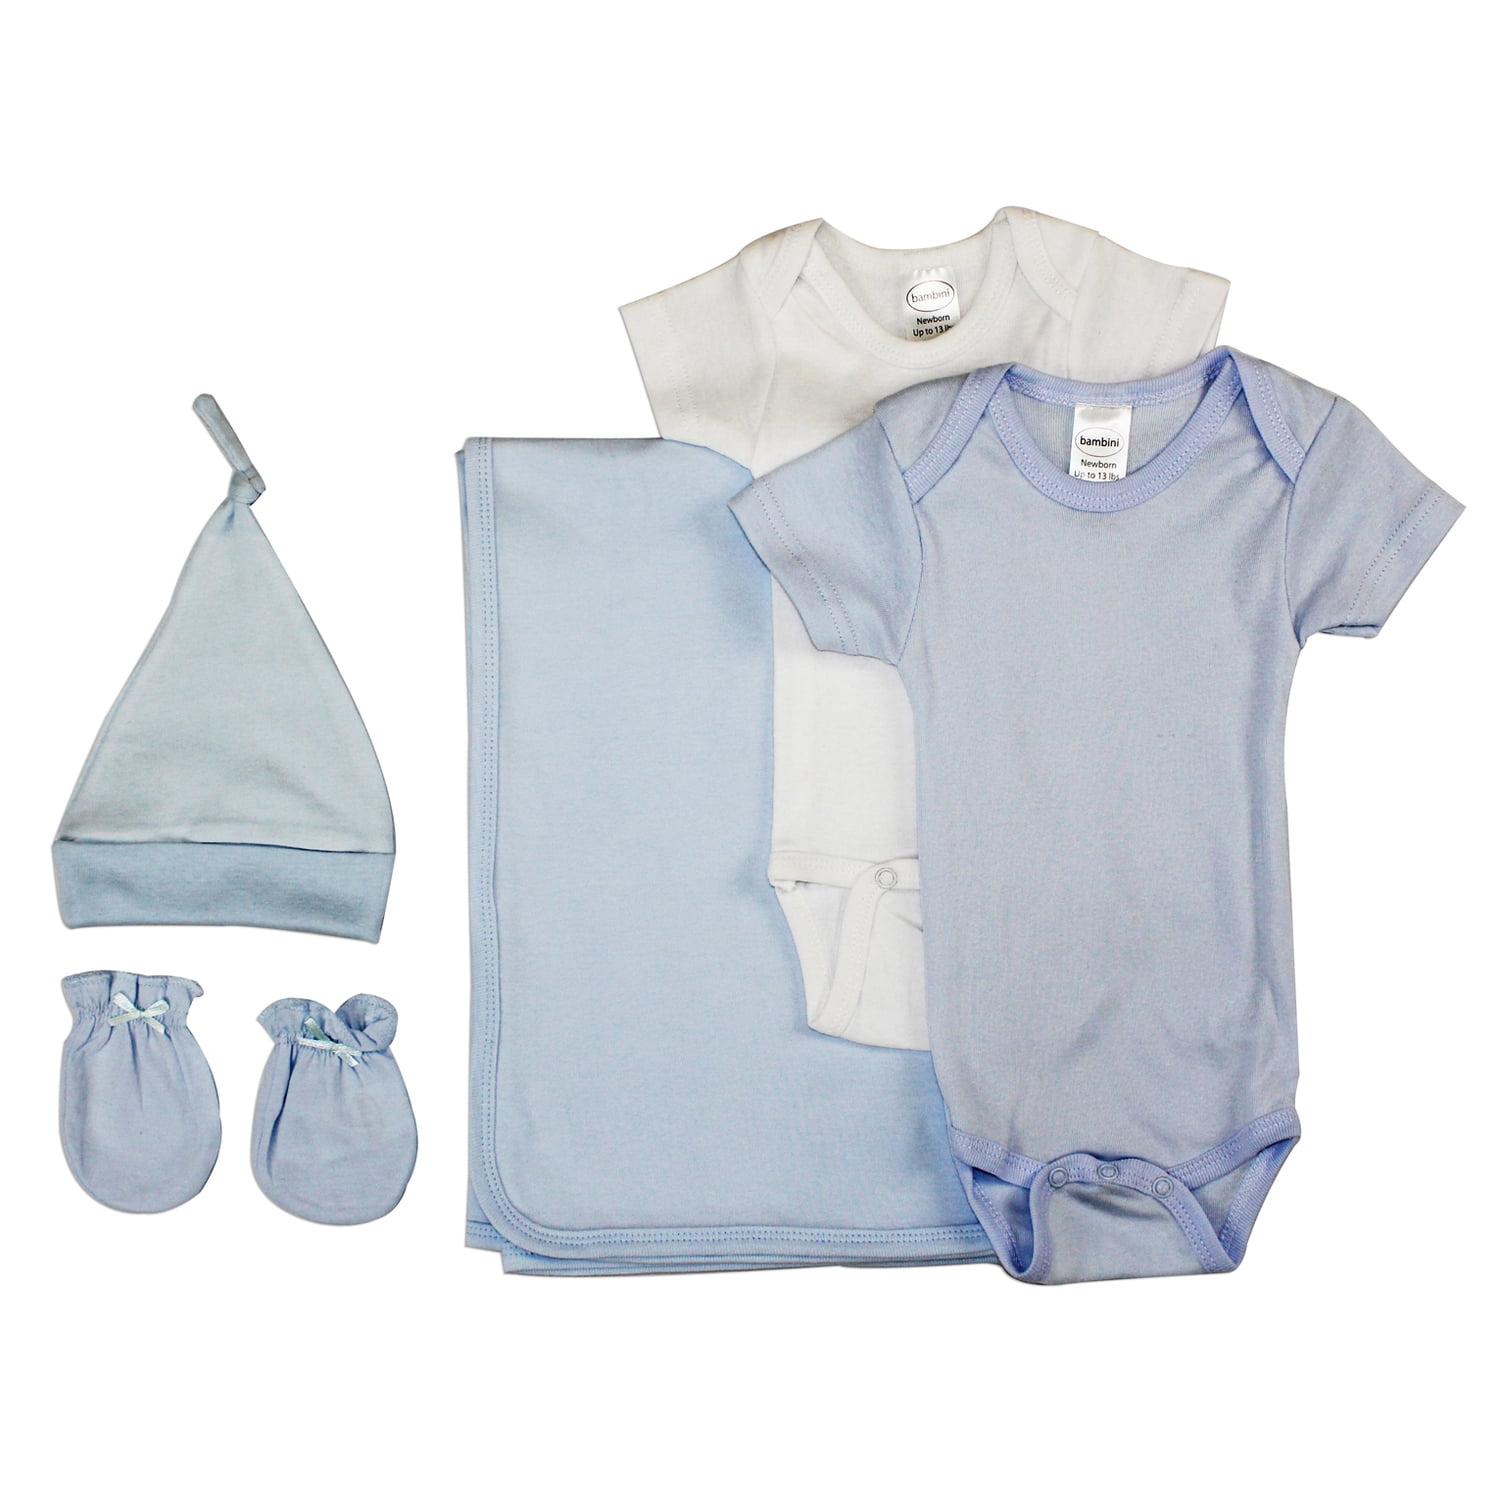 Bambini Baby Shower Layette Gift Set, 5pc (Baby Boys) - Walmart.com